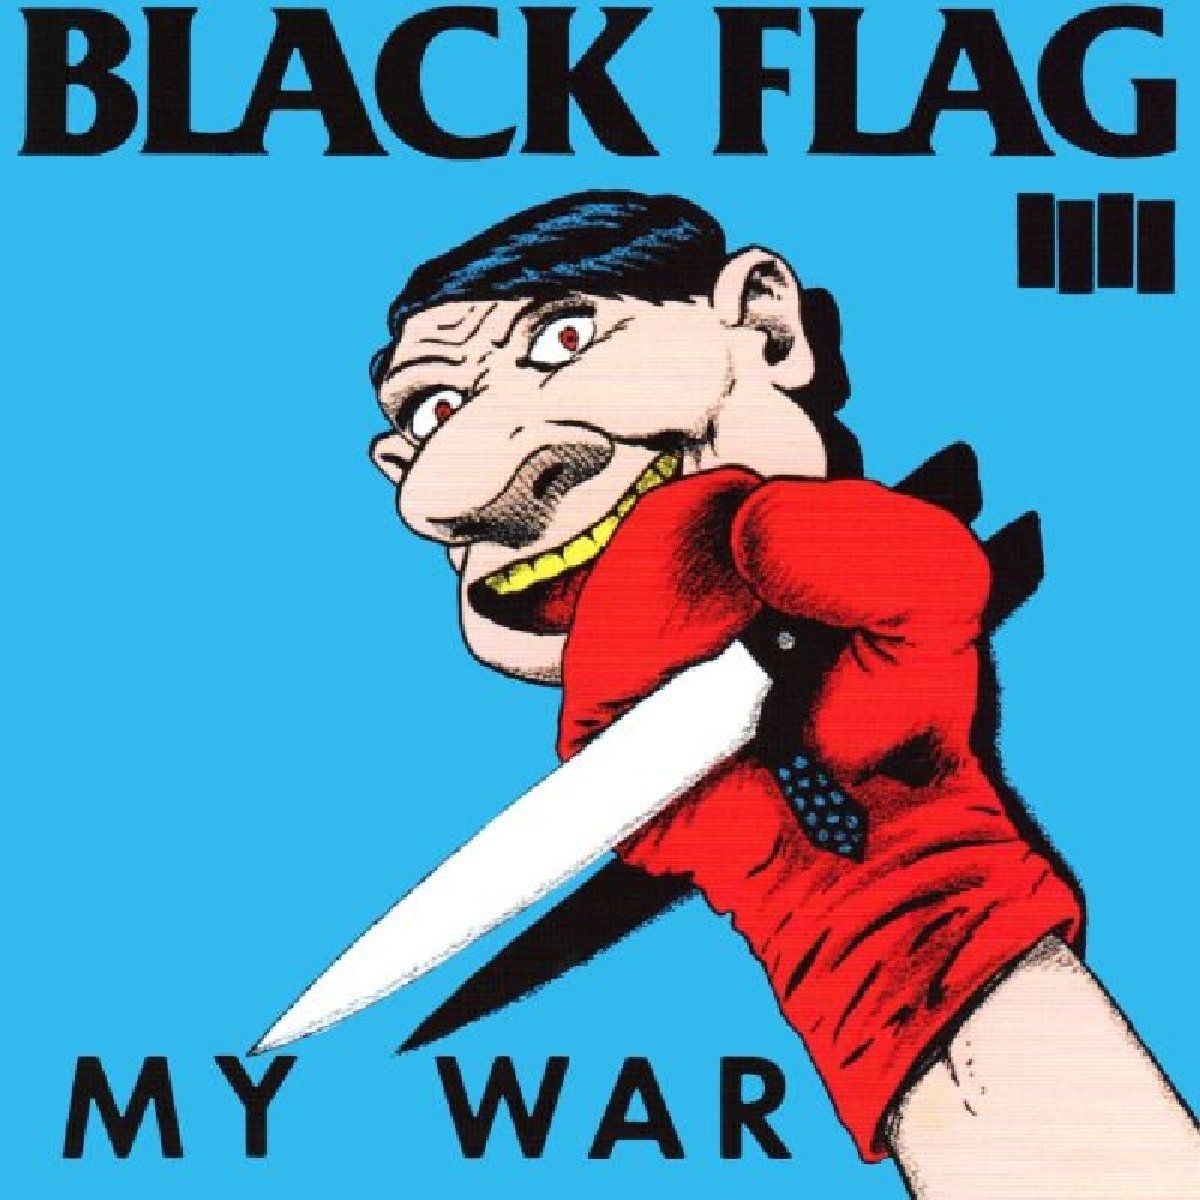 BLACK FLAG "My War" LP